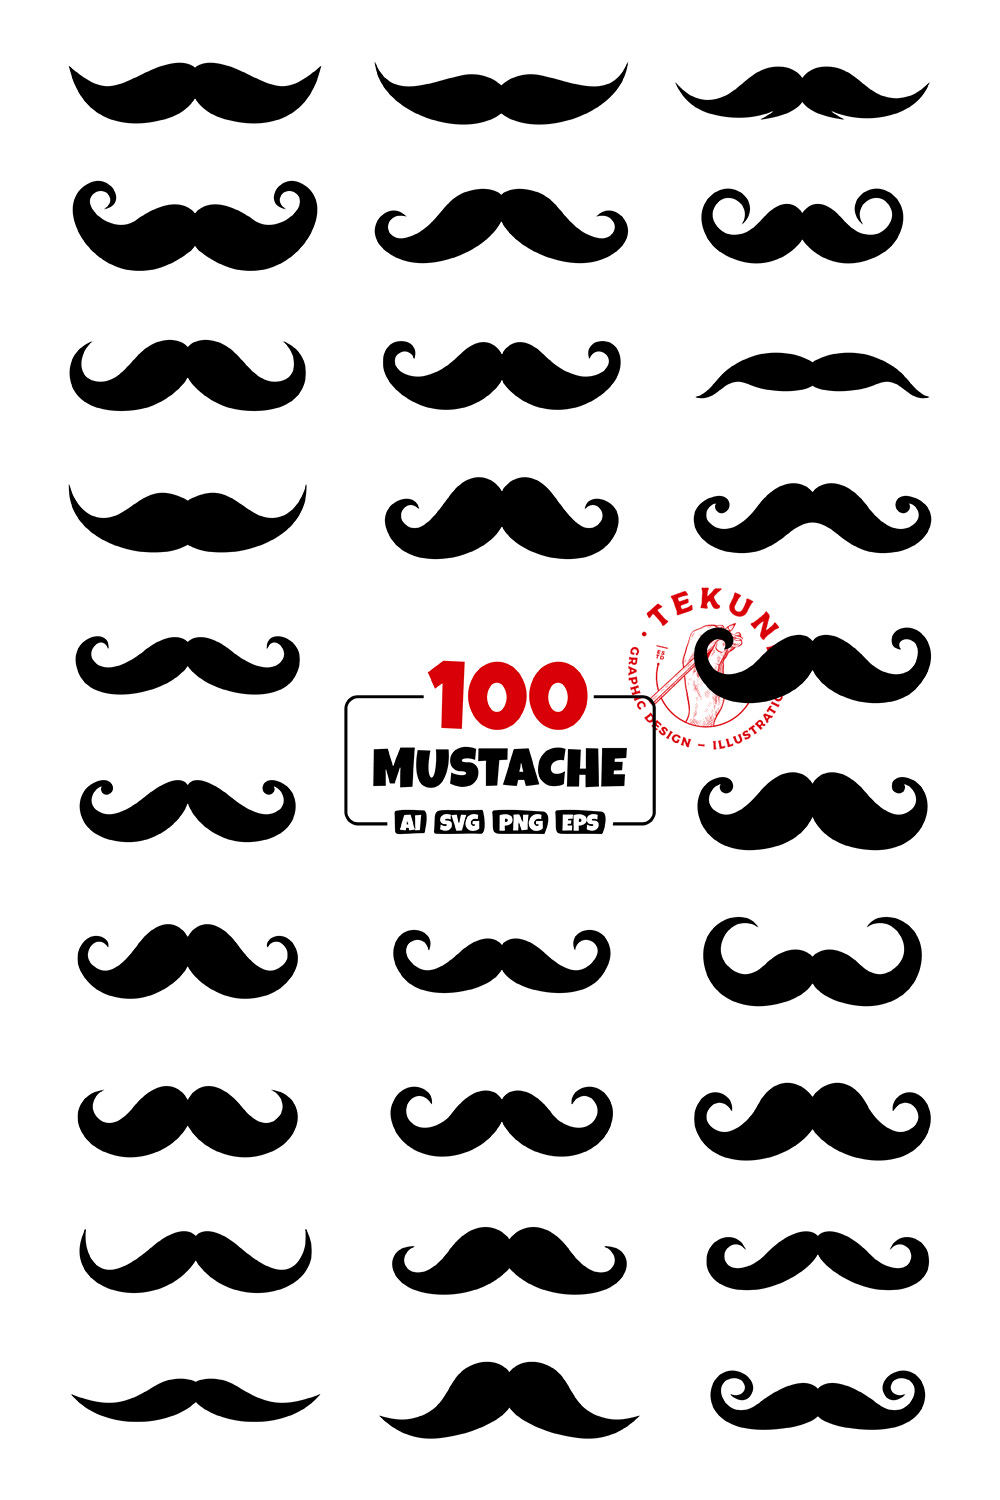 Moustache svg bundle | Digital download pinterest preview image.